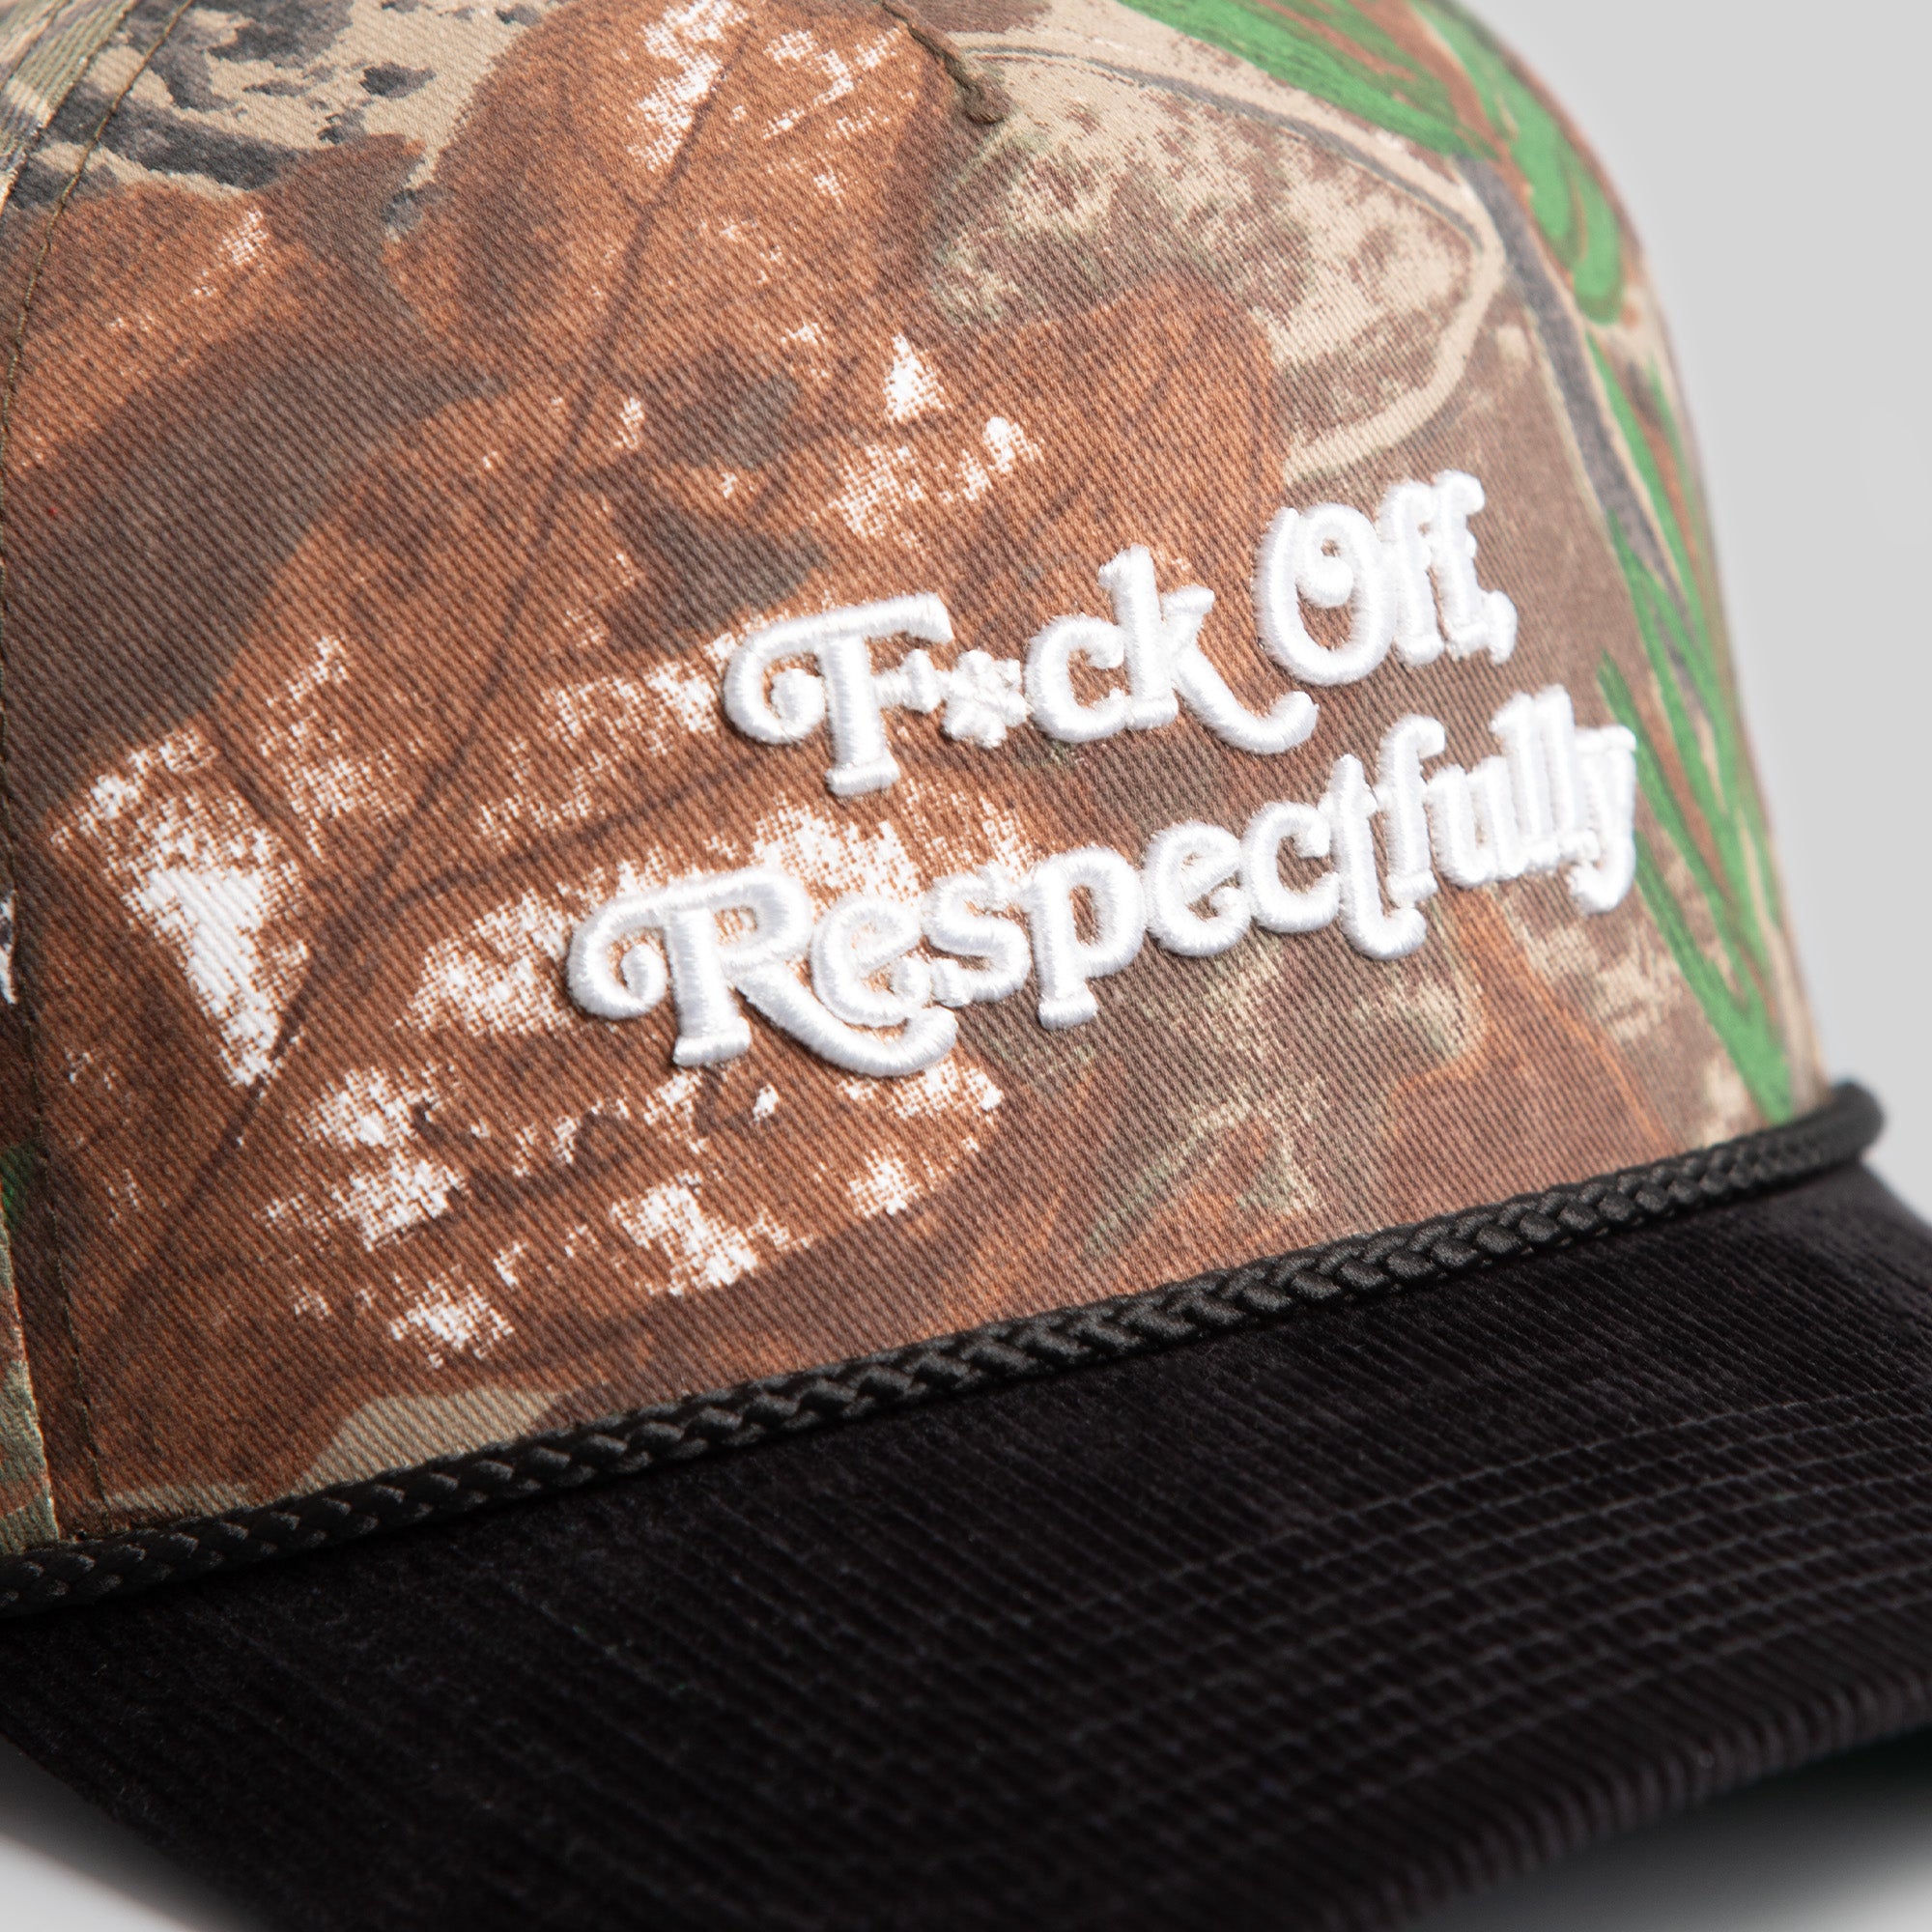 RESPECTFULLY CAMO/BLACK TRUCKER HAT